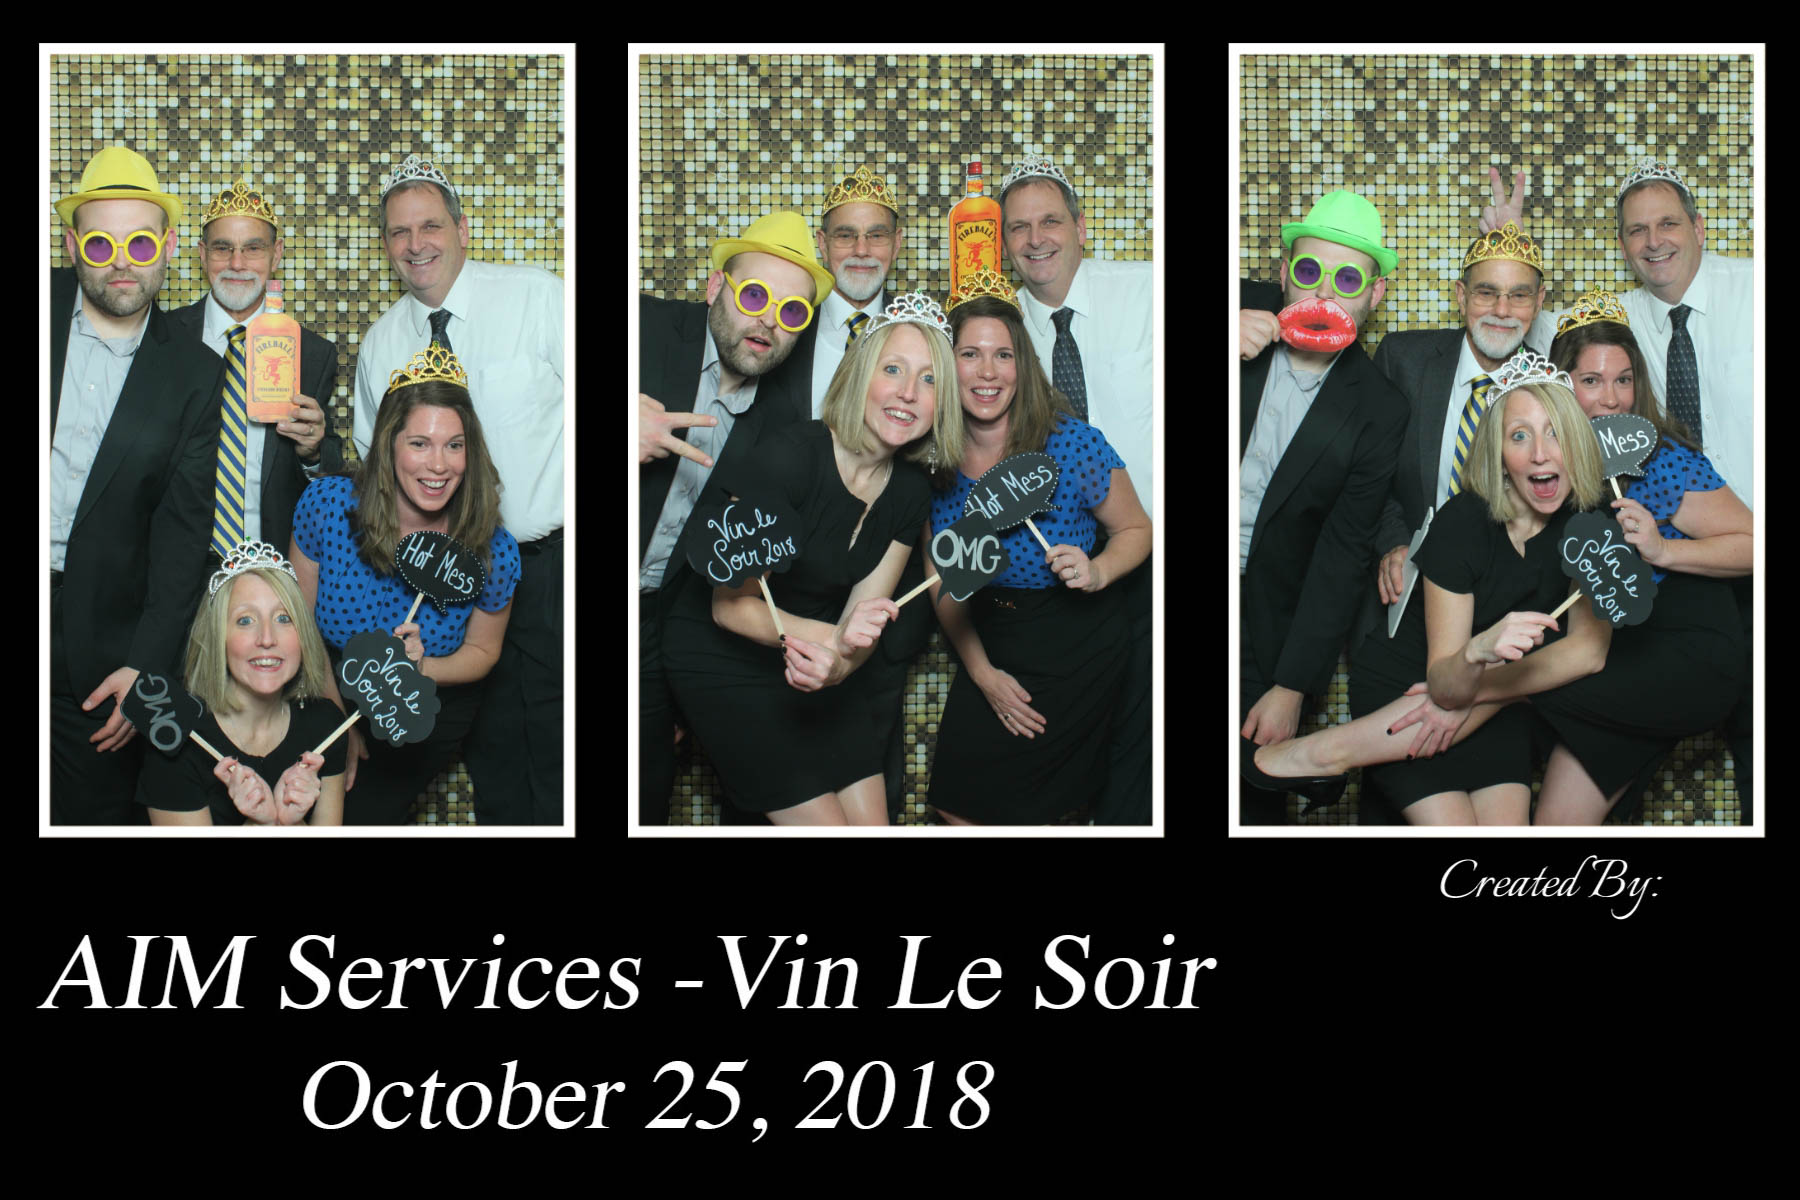 Vin Le Soir to benefit AIM Services, Inc. photobooth picture